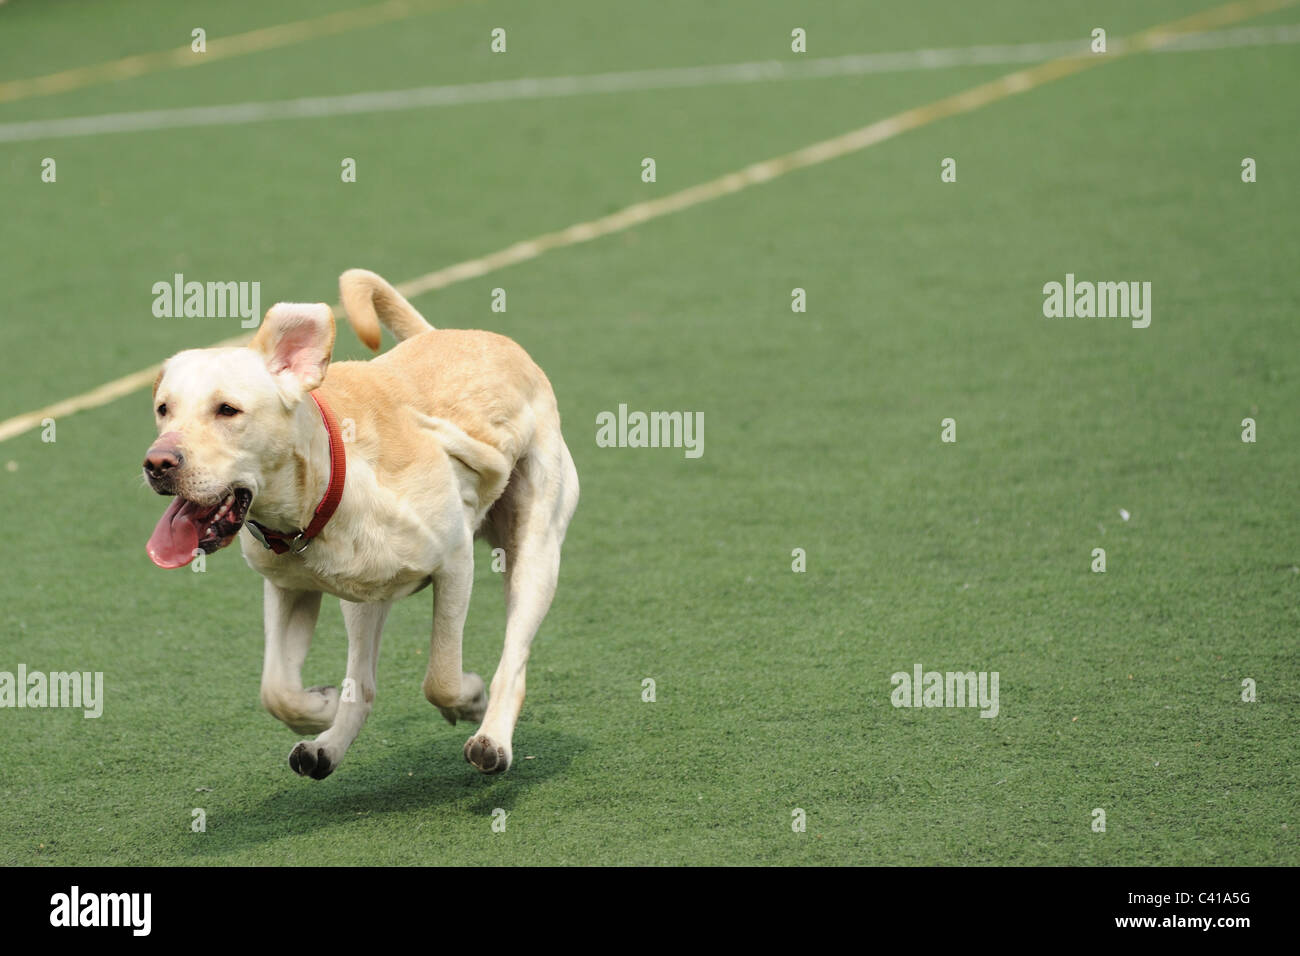 Labrador dog running on the playground Stock Photo